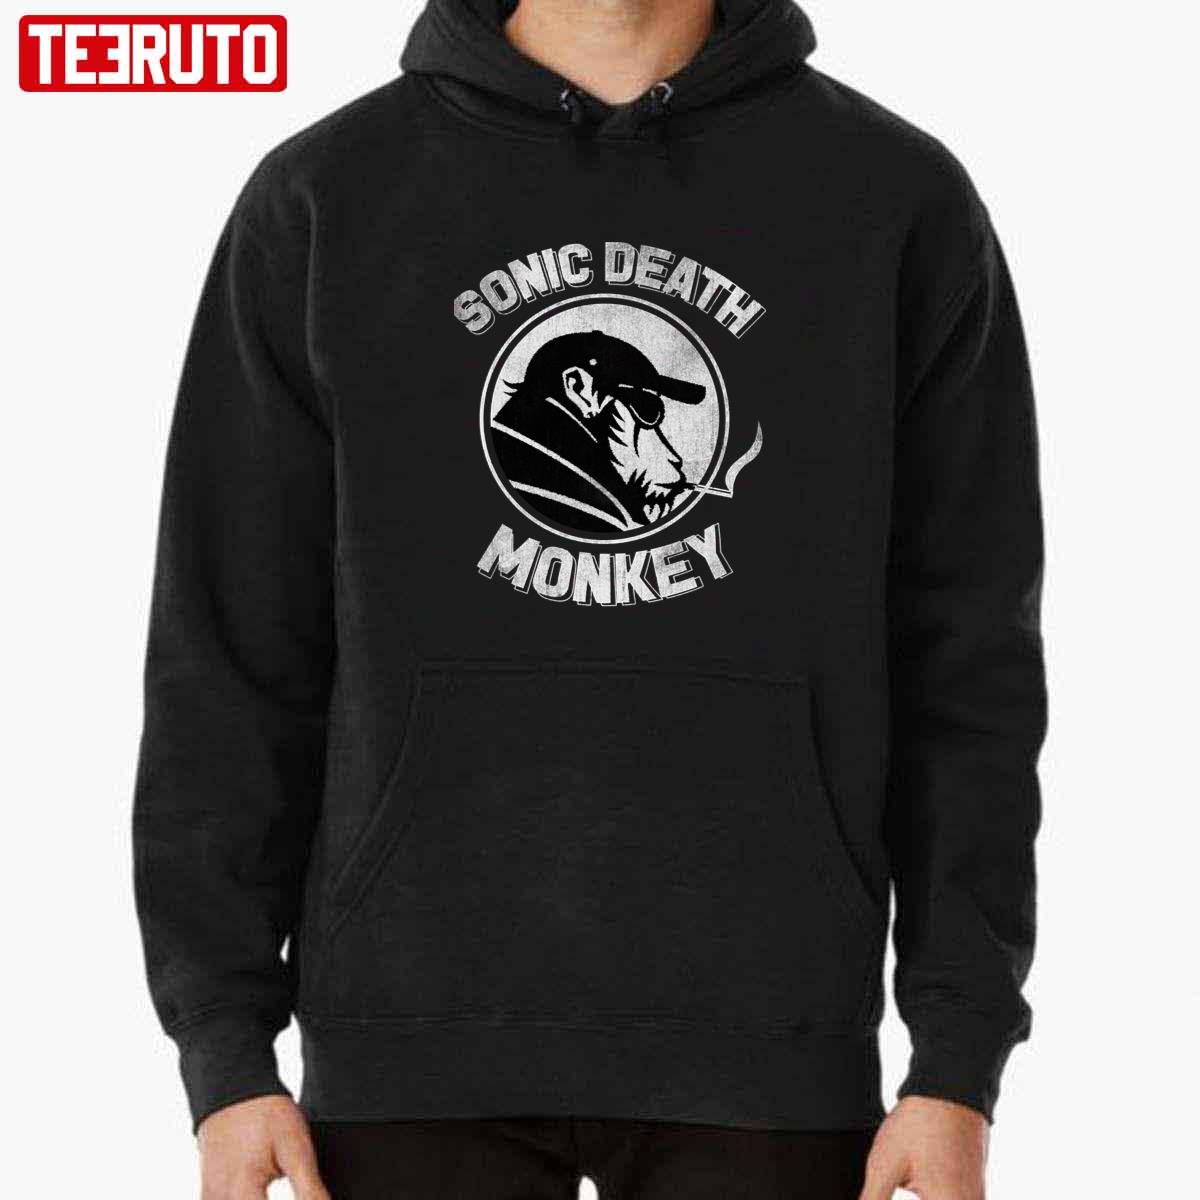 High Fidelity Sonic Death Monkey Unisex T-shirt